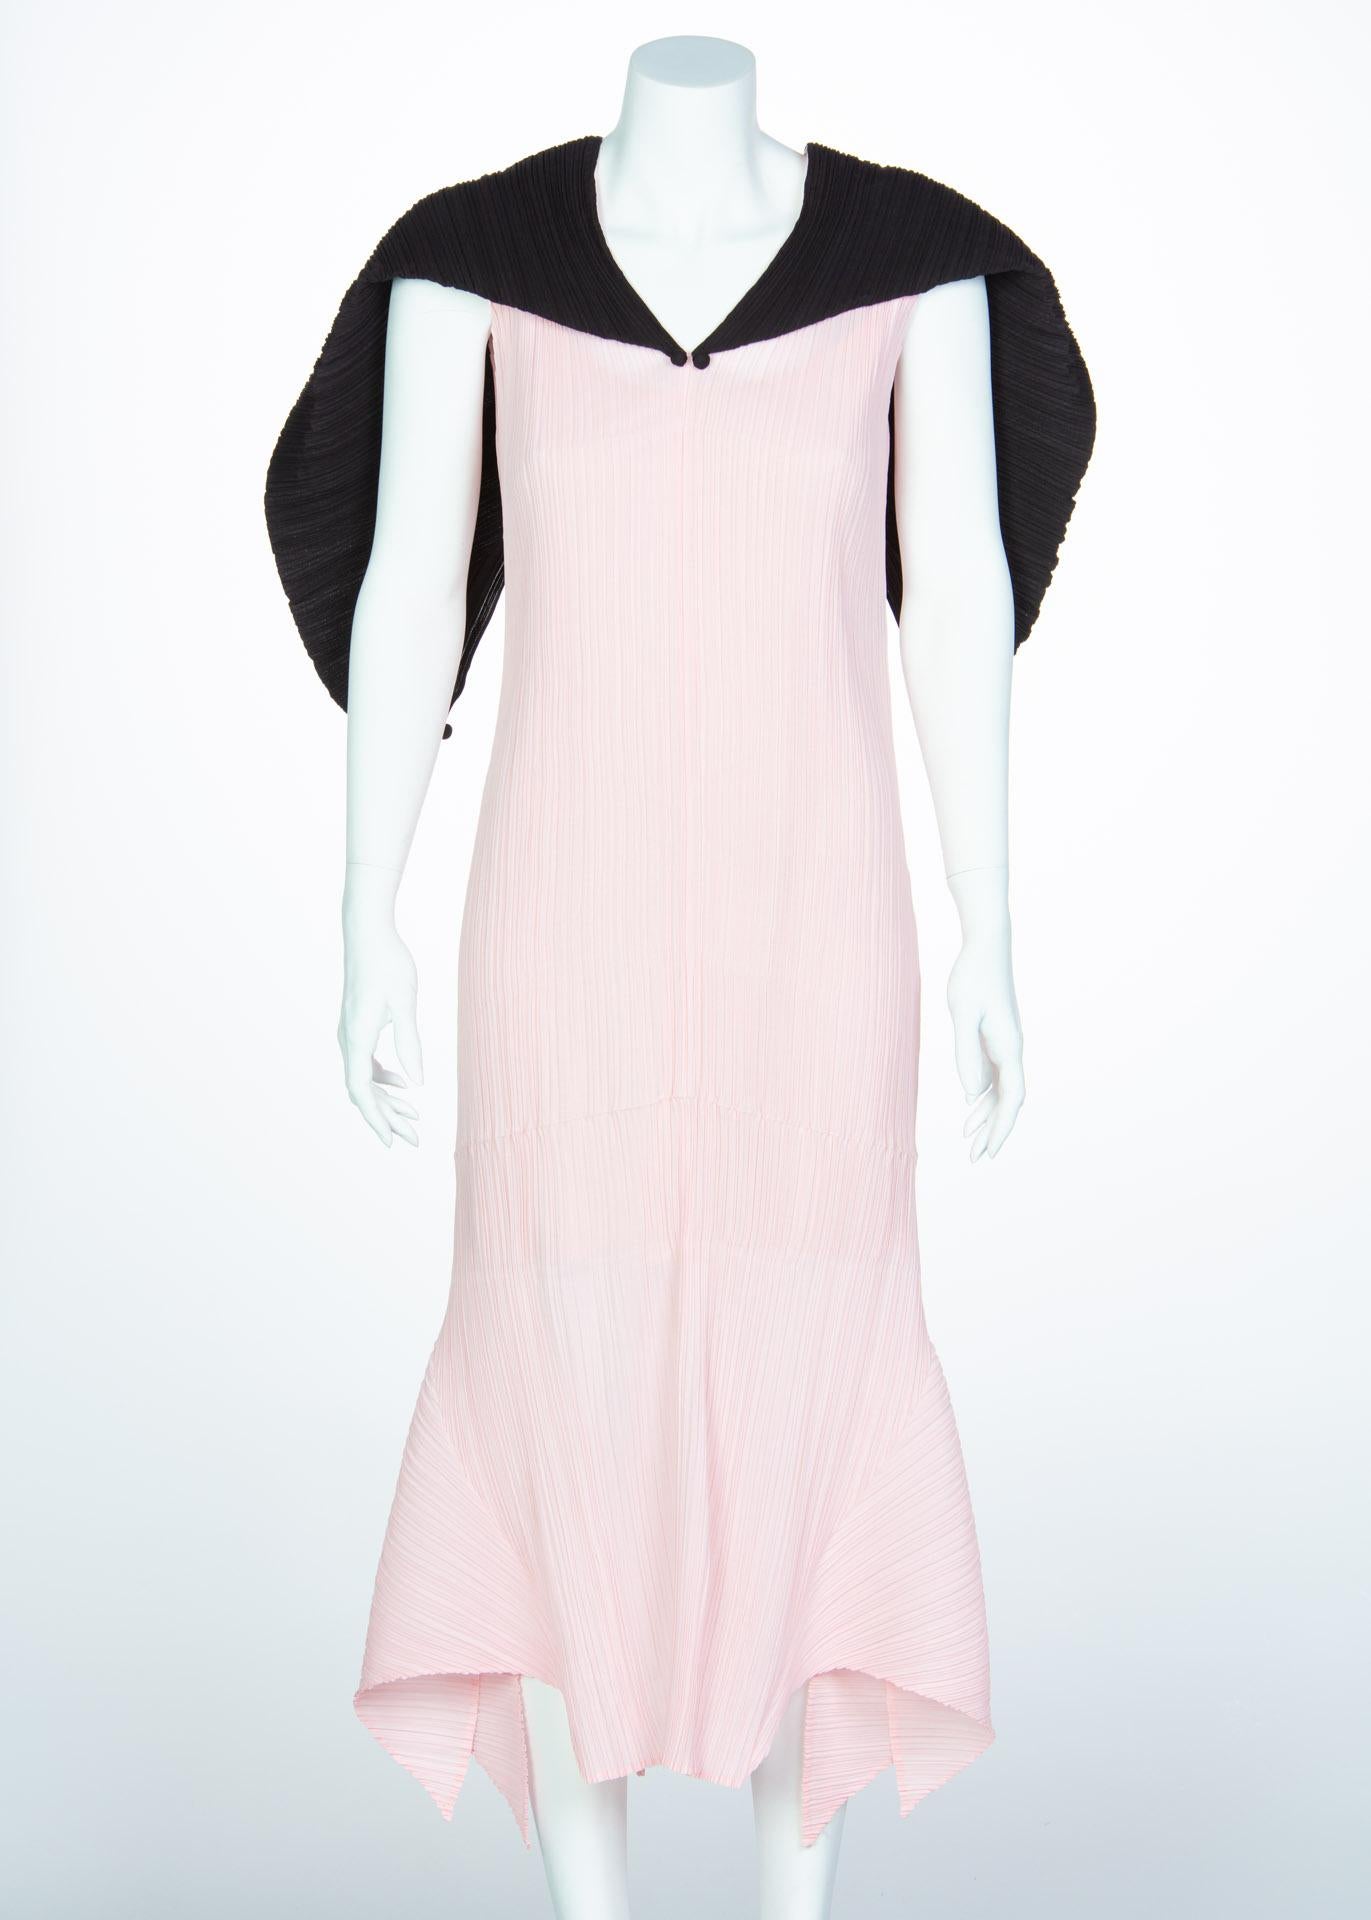 Issey Miyake Fette Pink Black Pleated Origami Dress 4